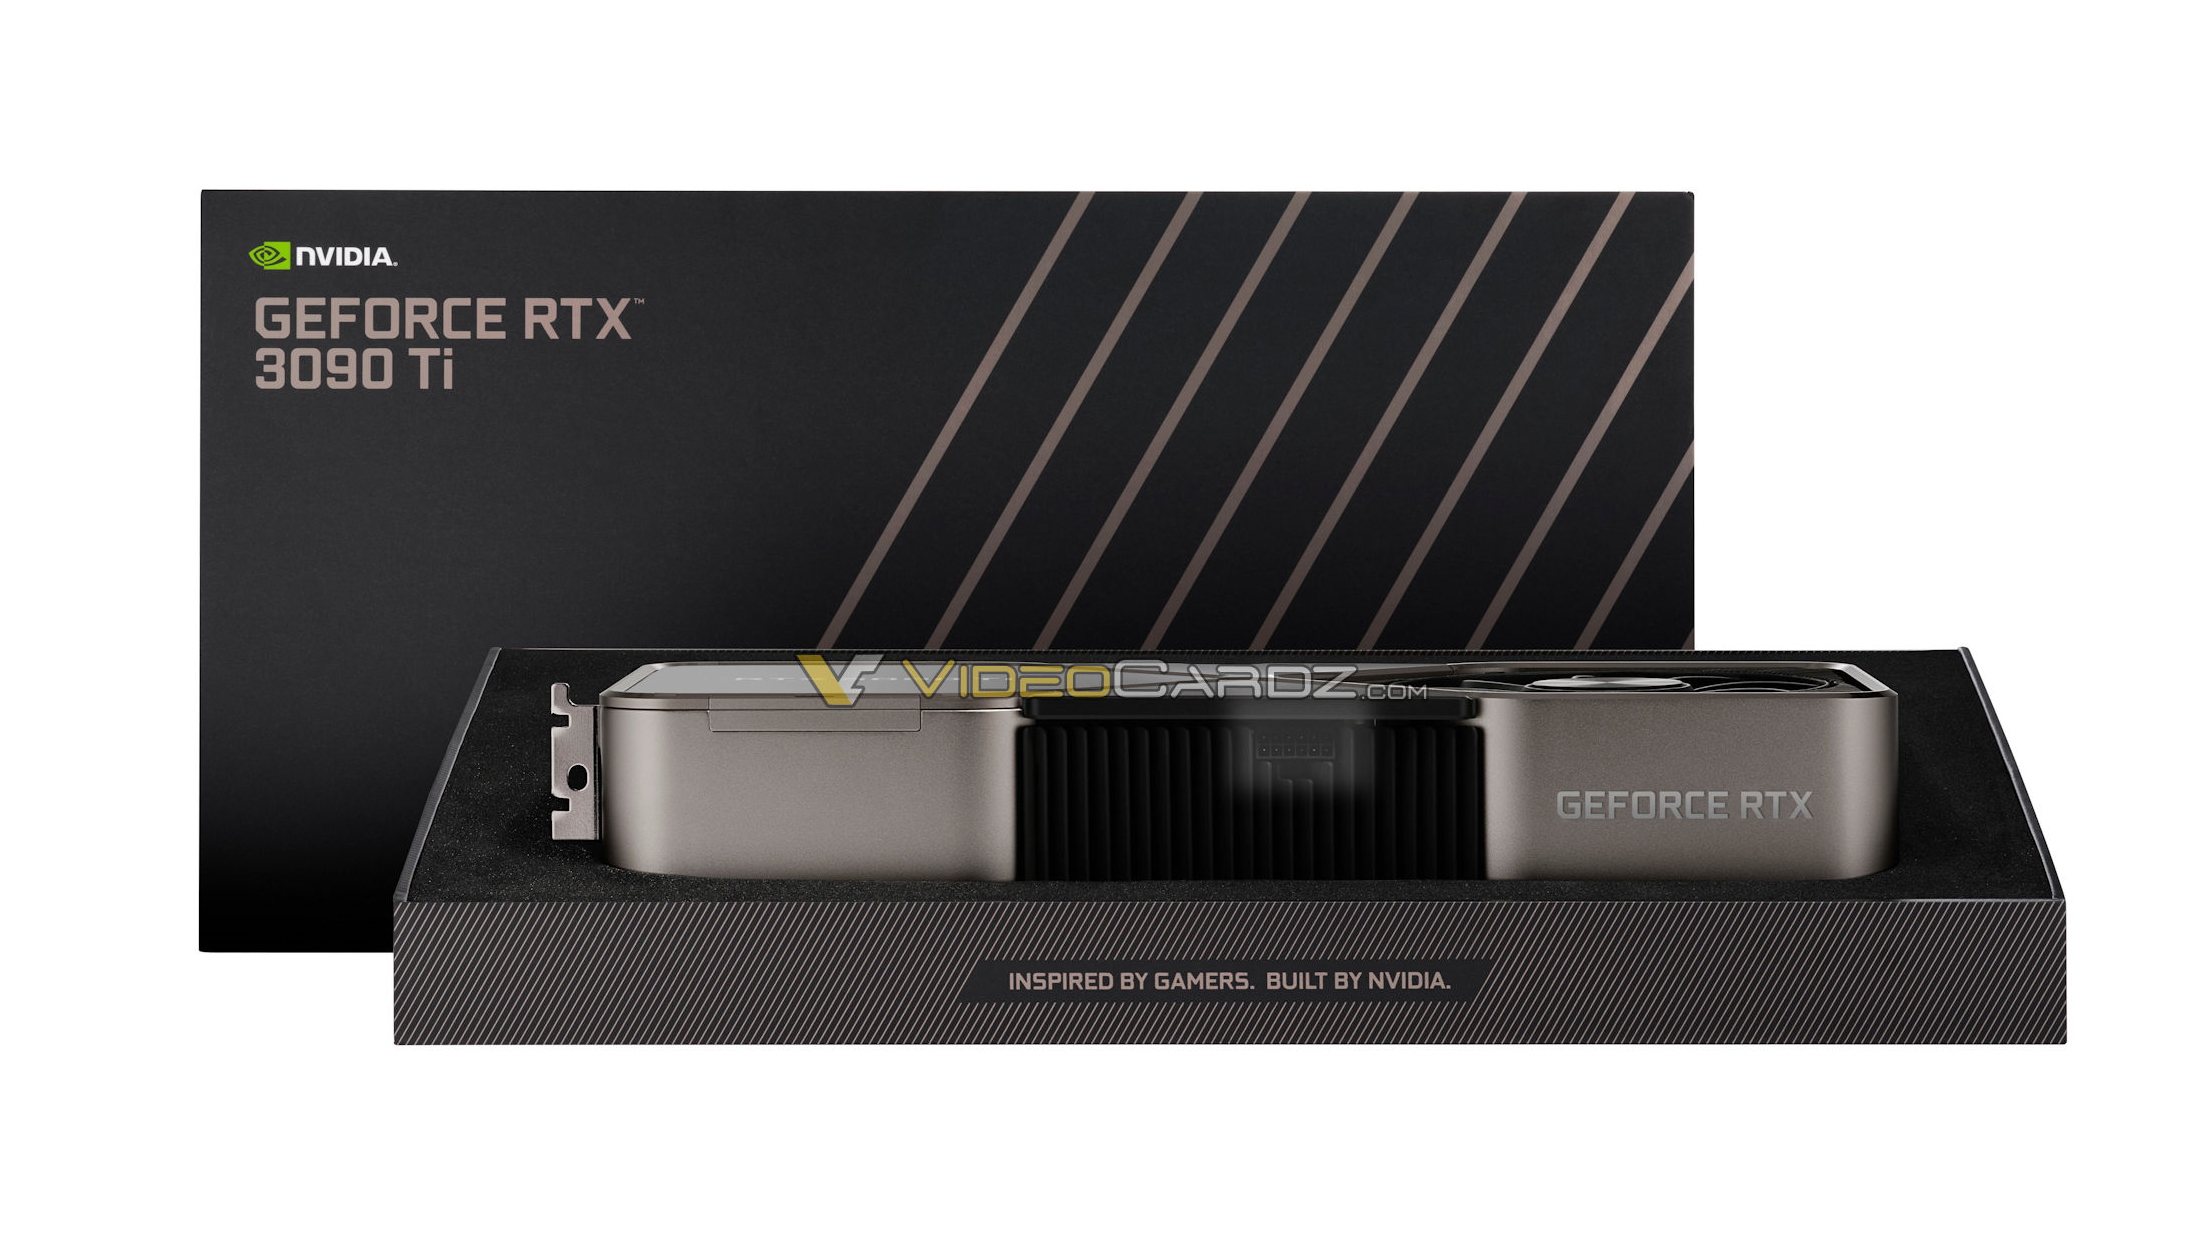 صور مسربة لبطاقة رسومات Nvidia RTX 3090 Ti